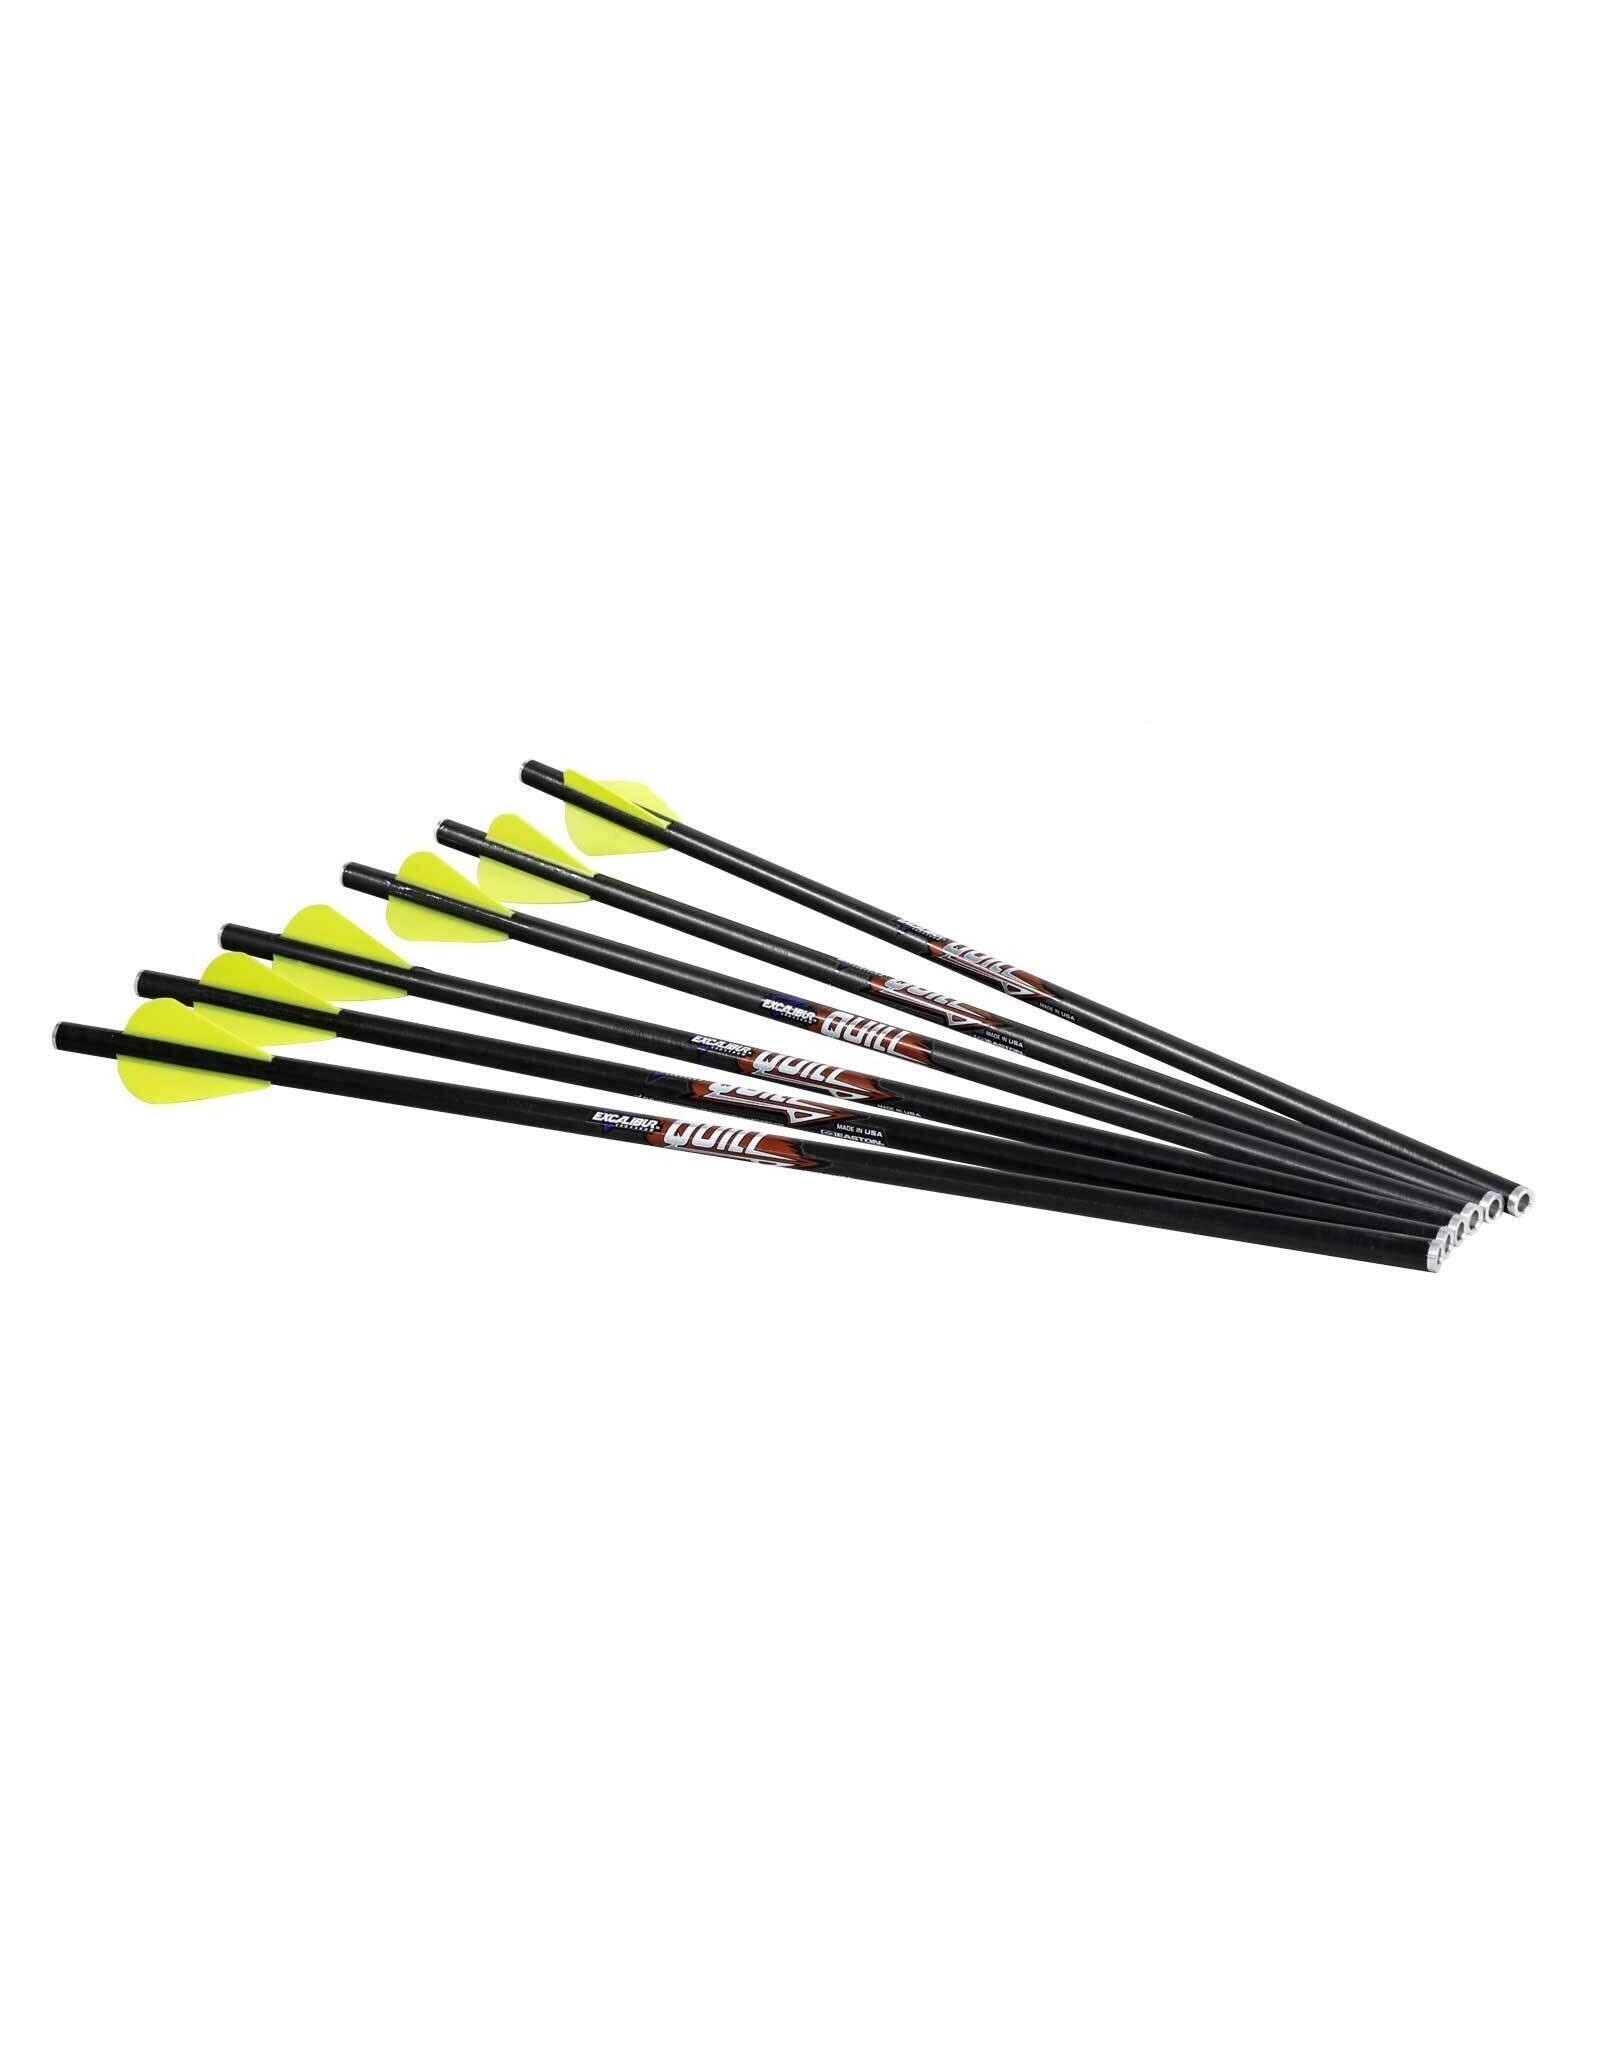 Excalibur Excalibur Quill Carbon Arrows (Pack of 6)